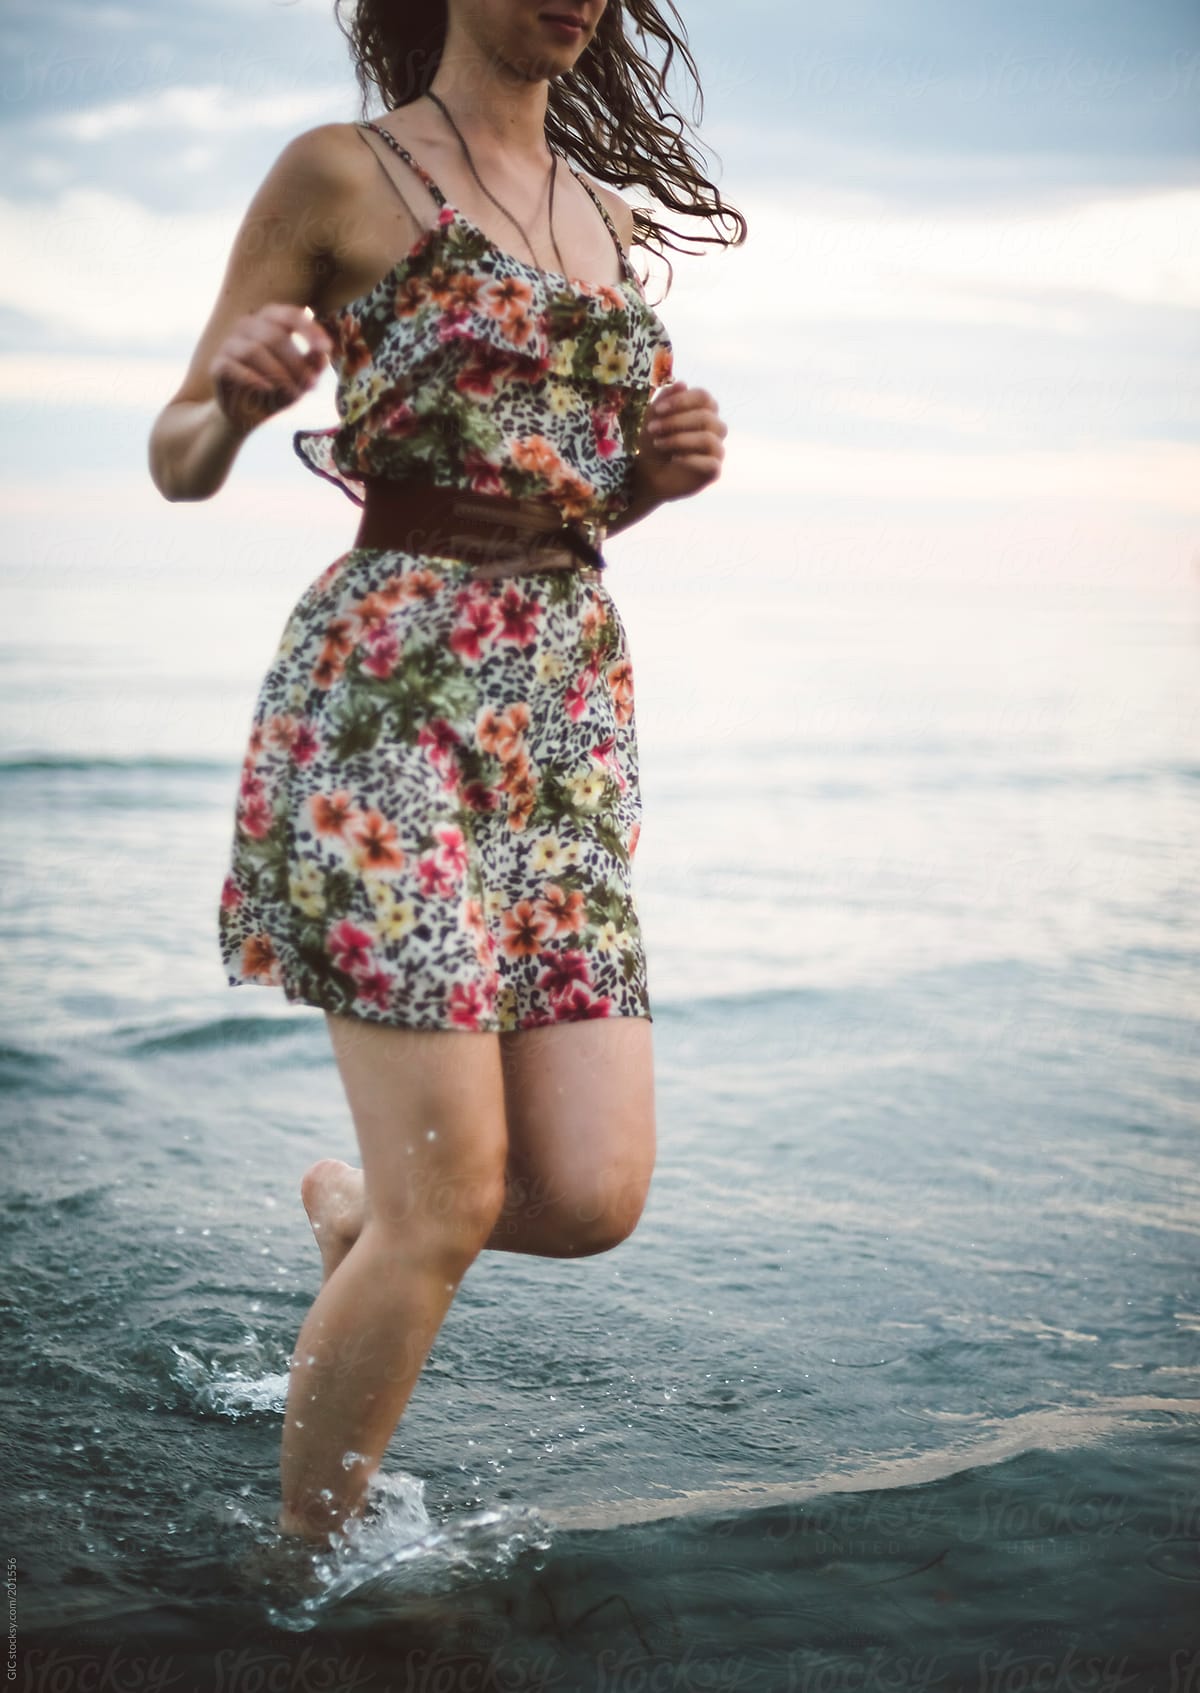 Woman Run At The Beach By Stocksy Contributor Simone Wave Stocksy